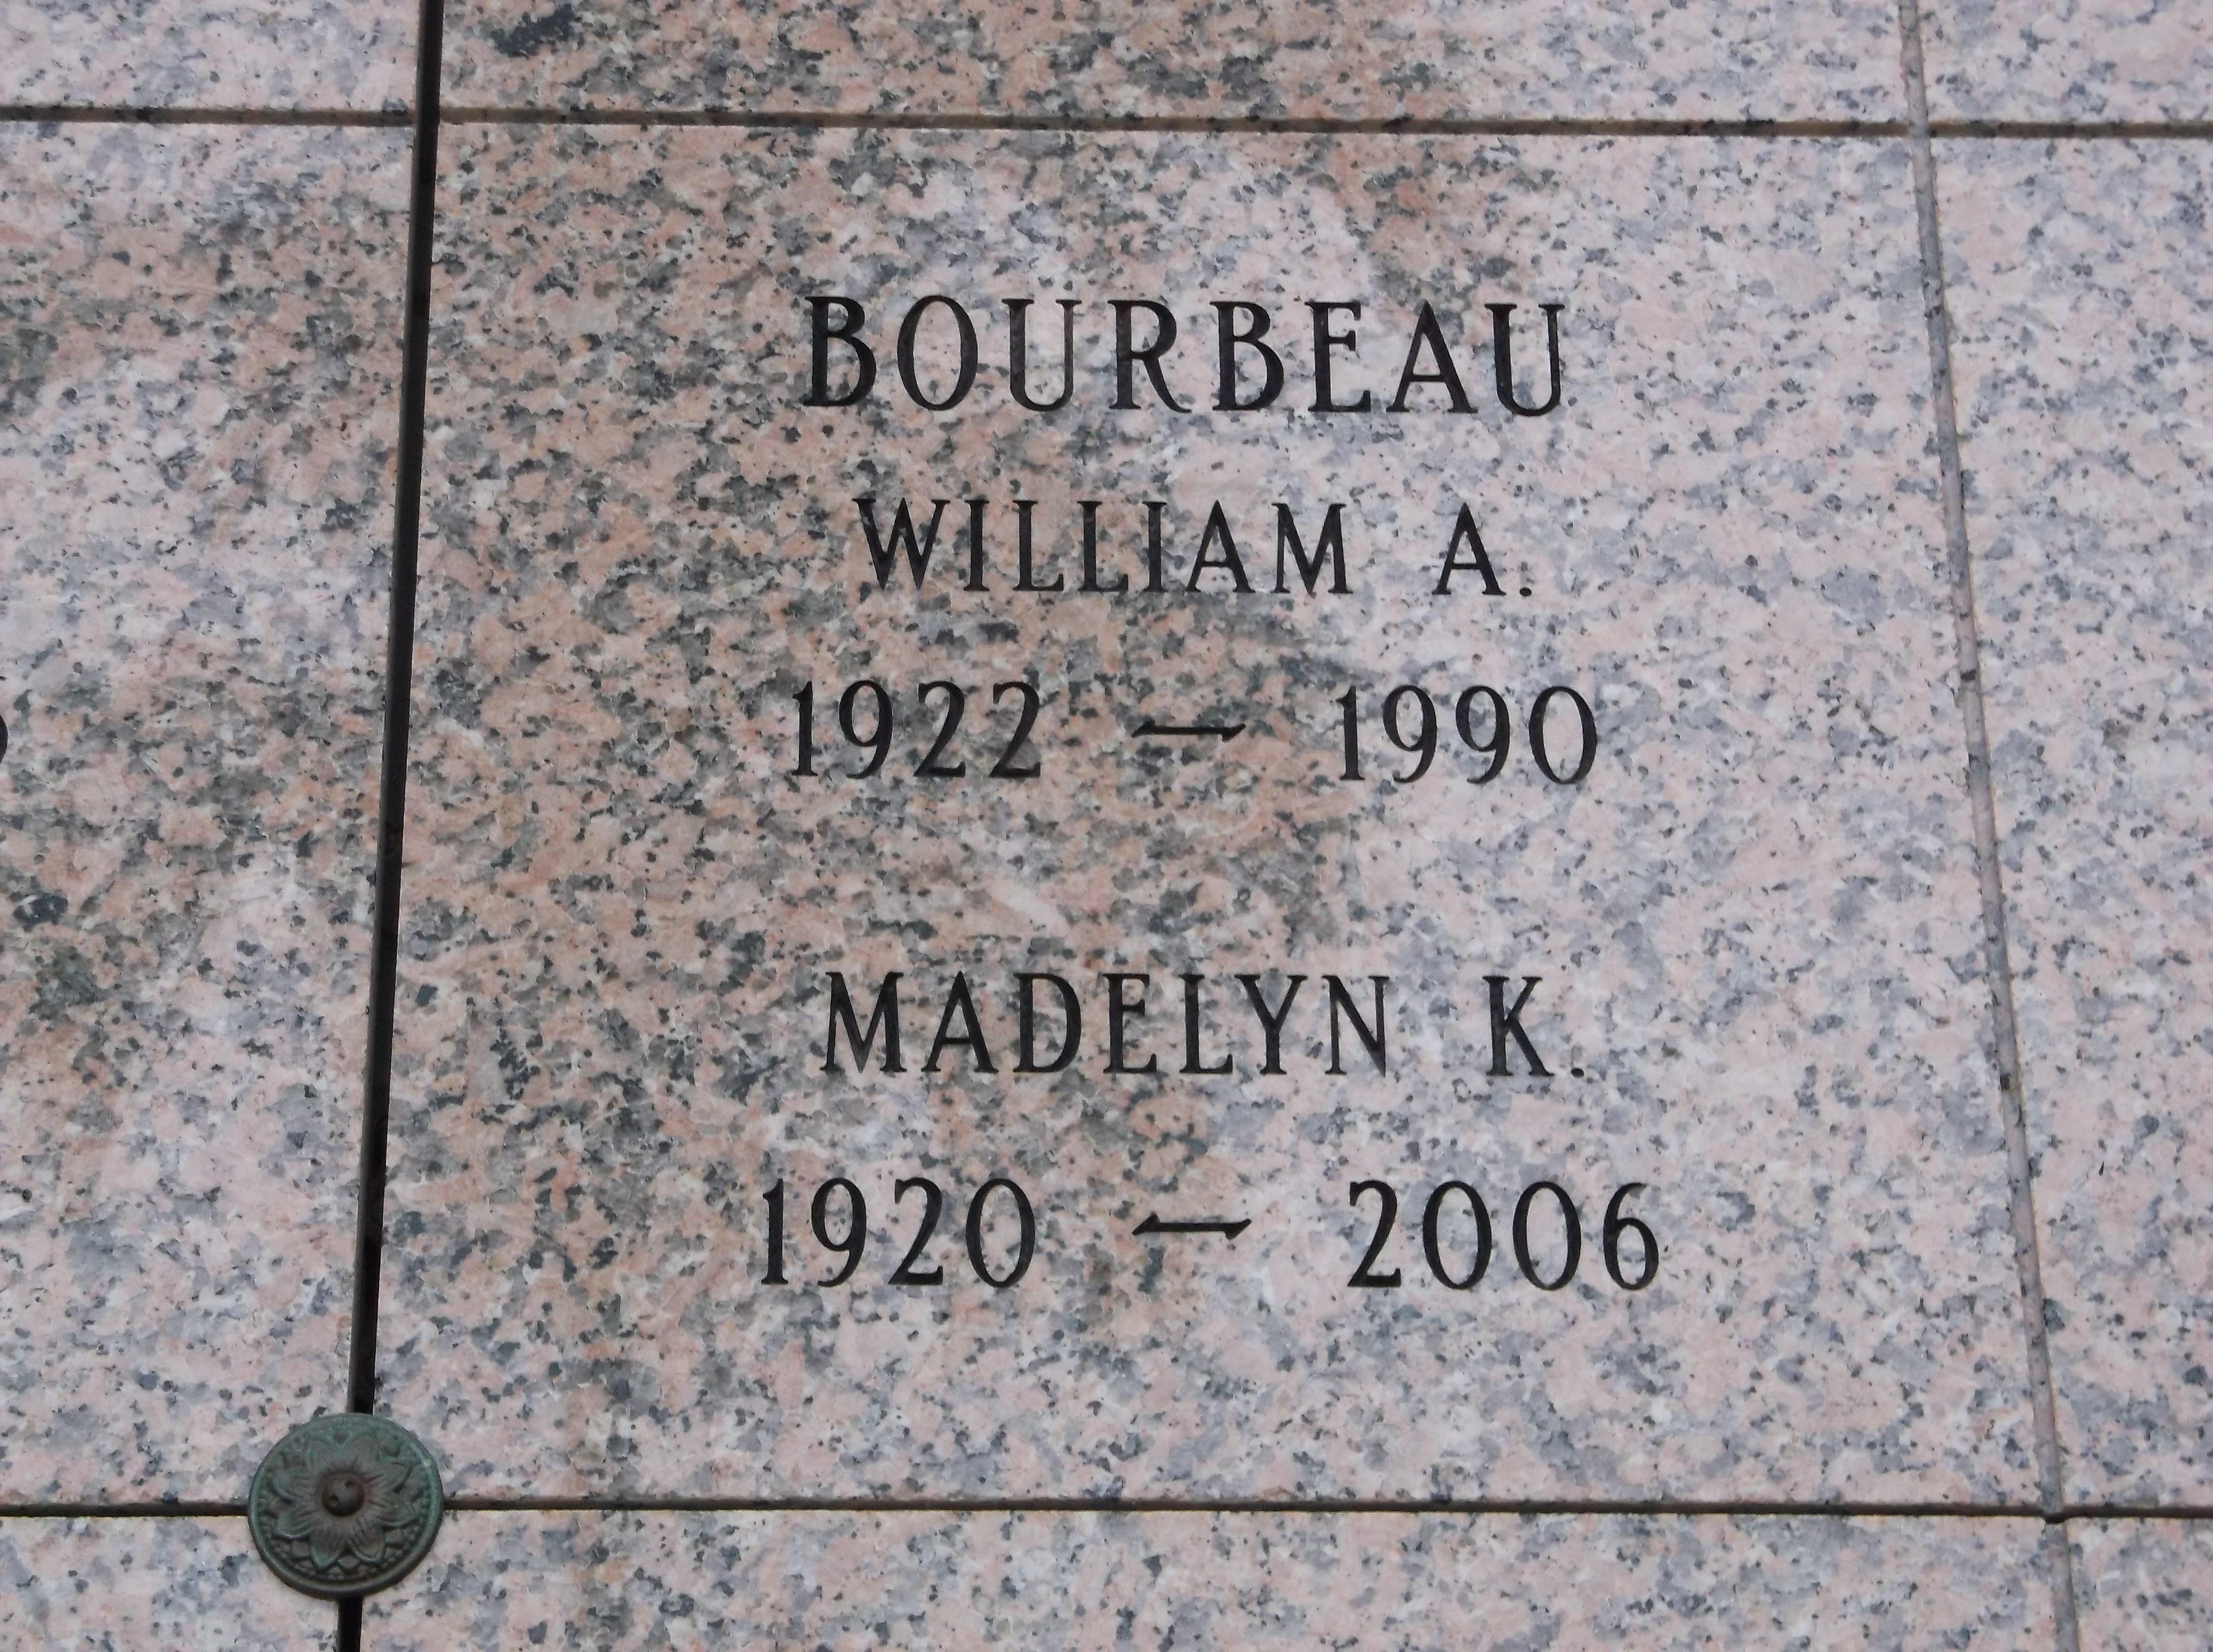 William A Bourbeau